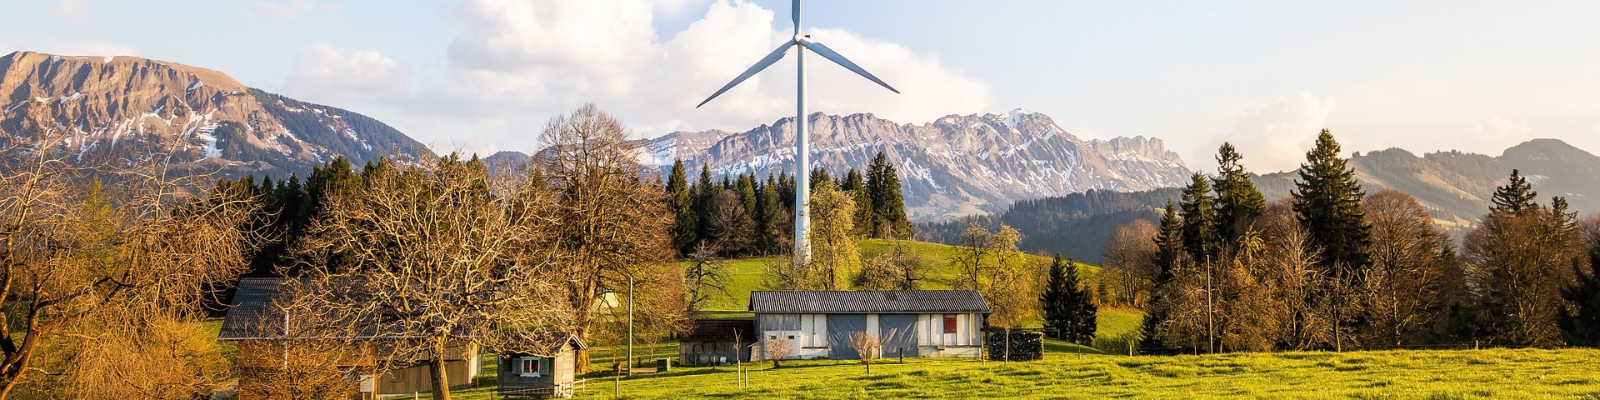 Countryside with wind turbine